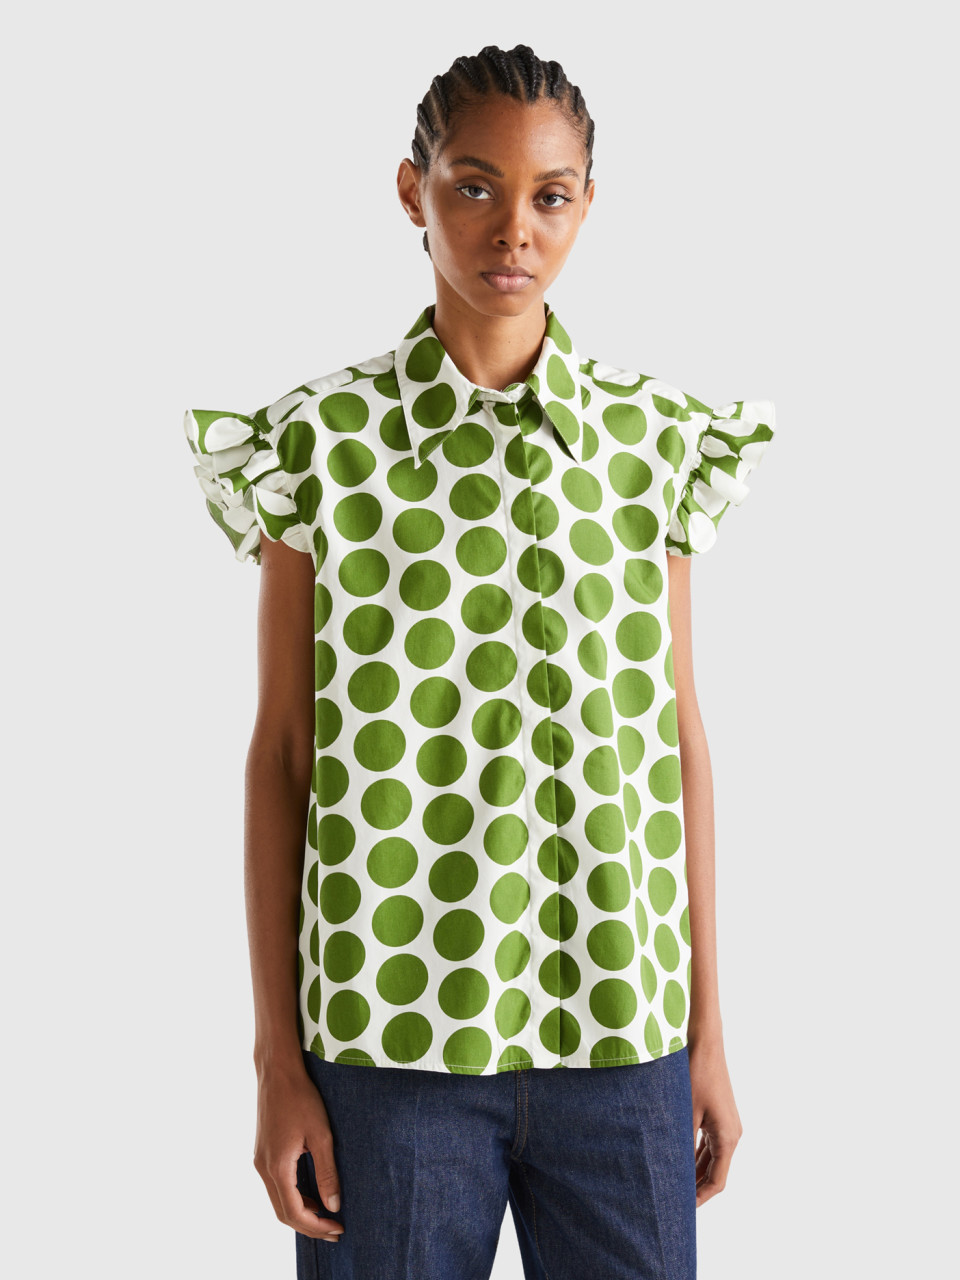 Benetton, Sleeveless Polka Dot Shirt, Green, Women